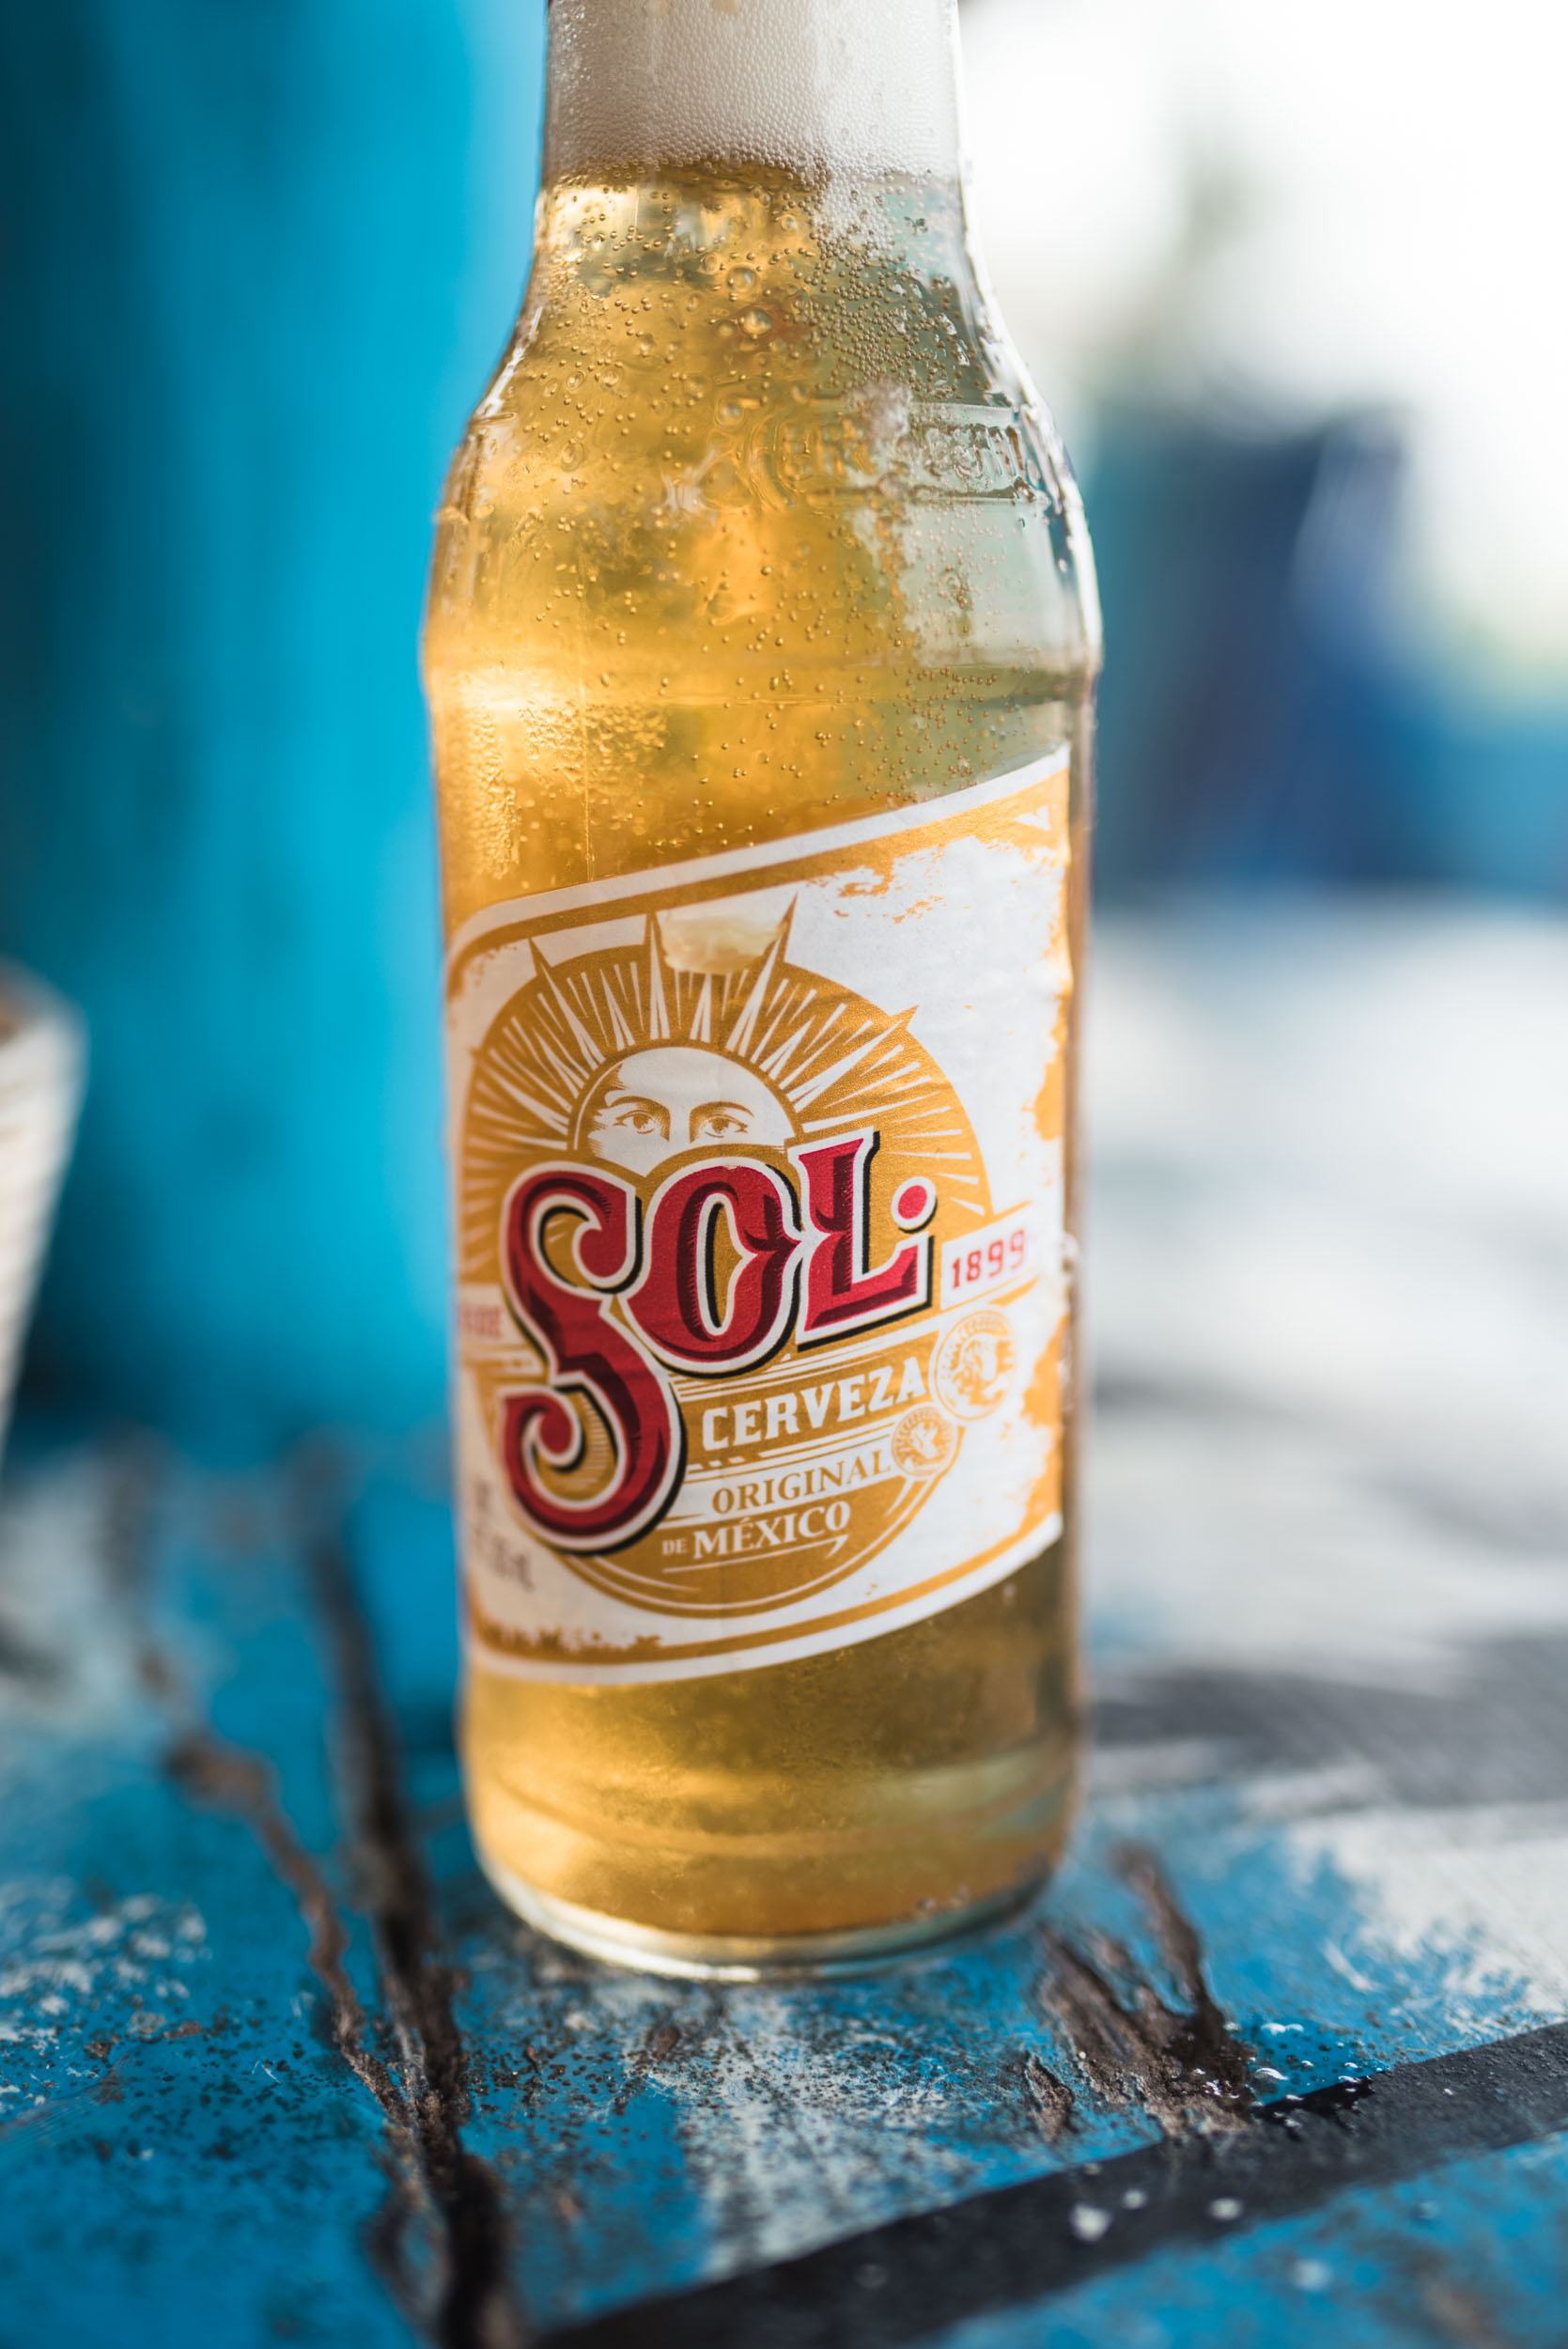 Sol beer bottle